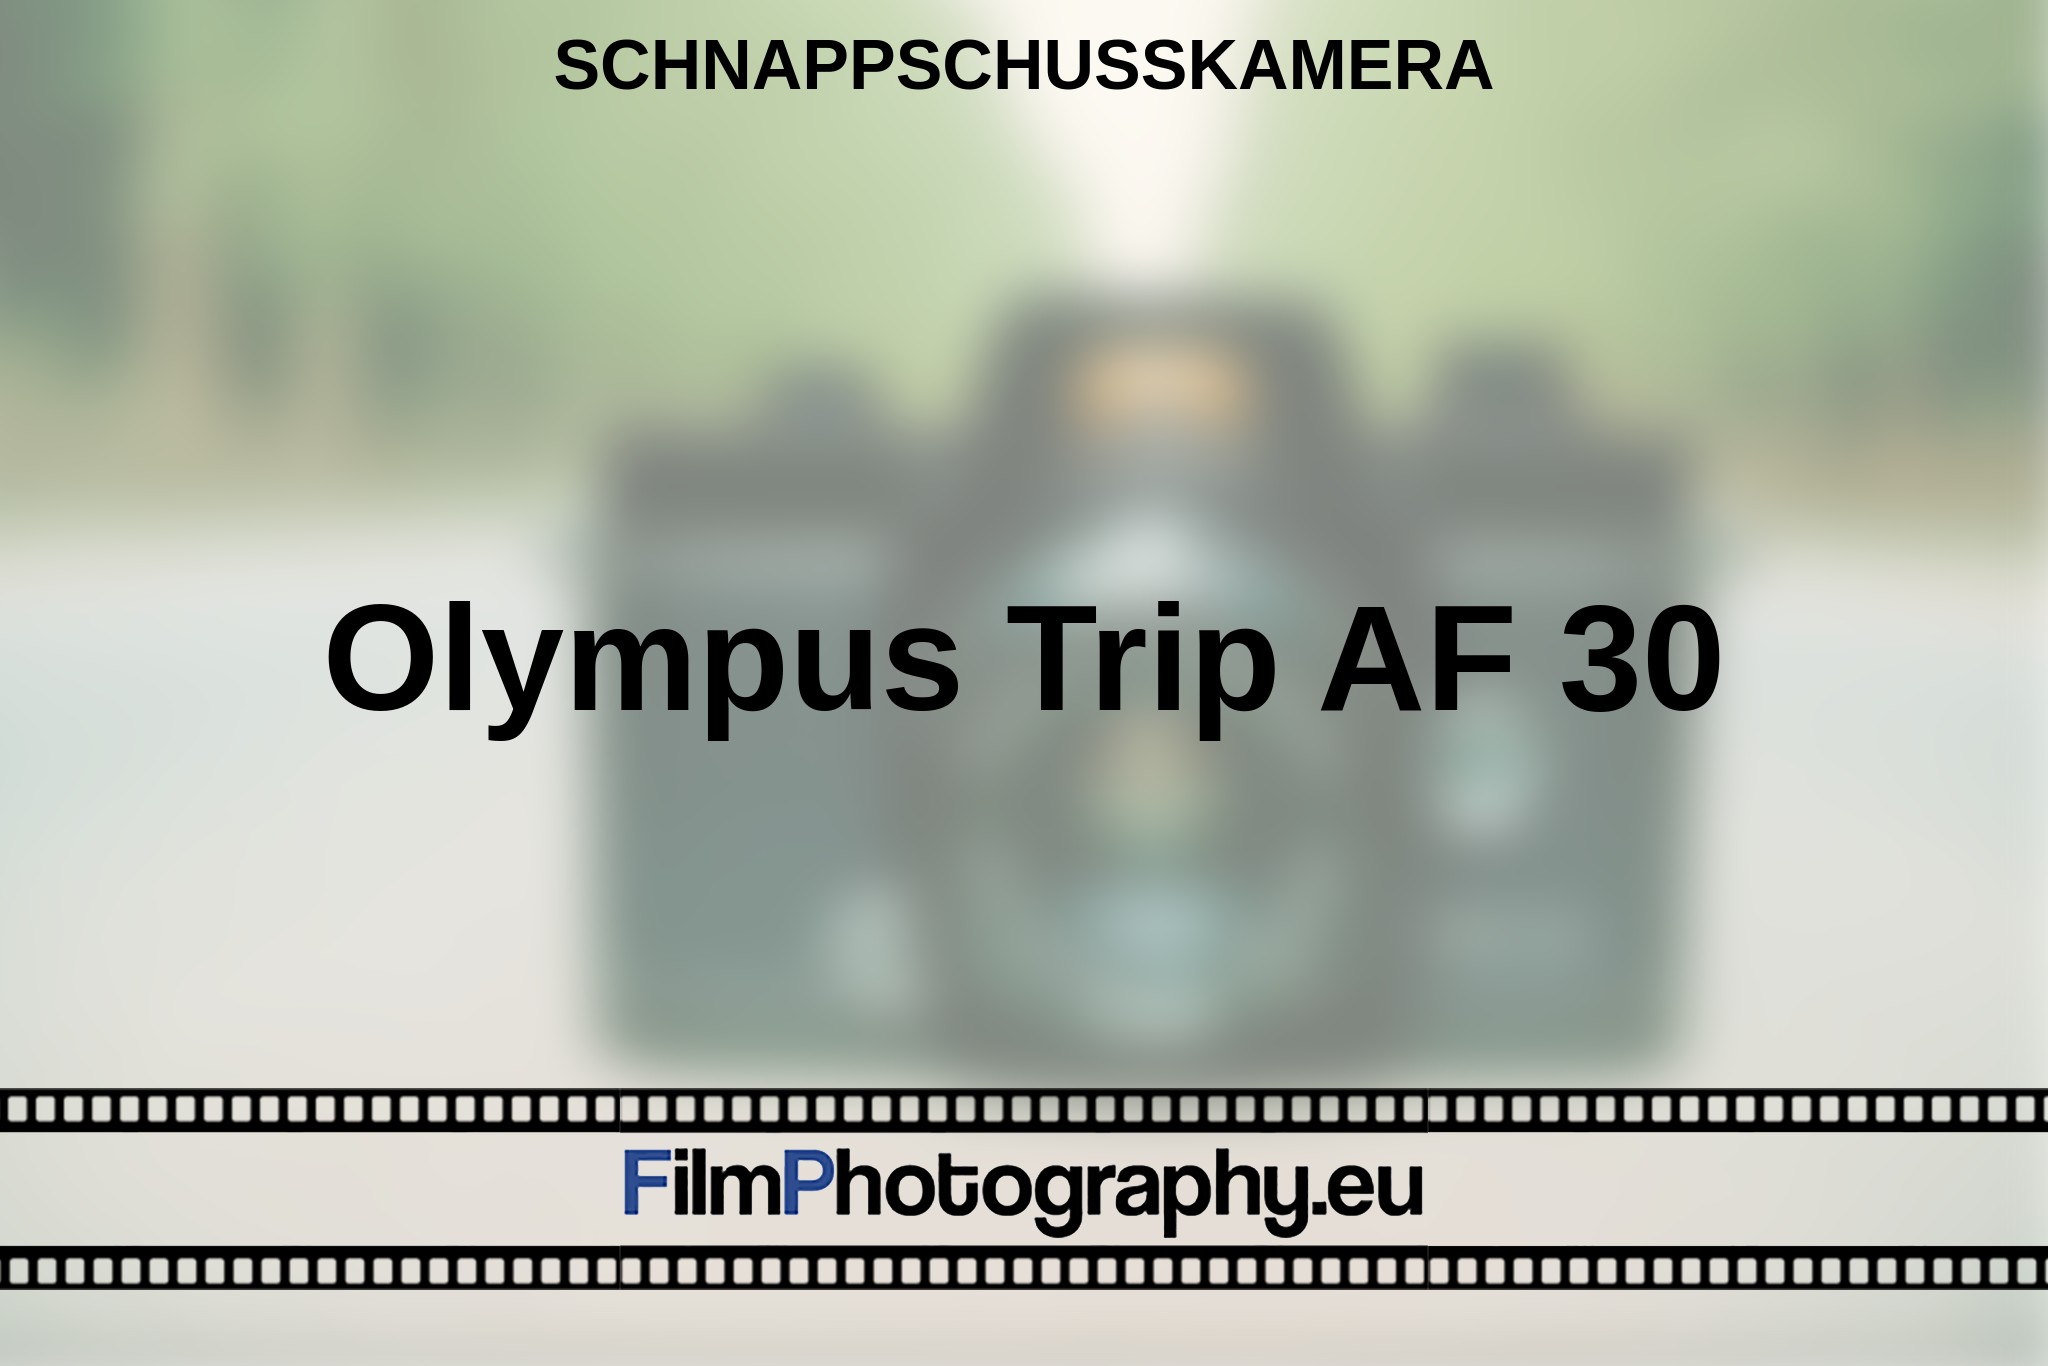 olympus-trip-af-30-schnappschusskamera-bnv.jpg